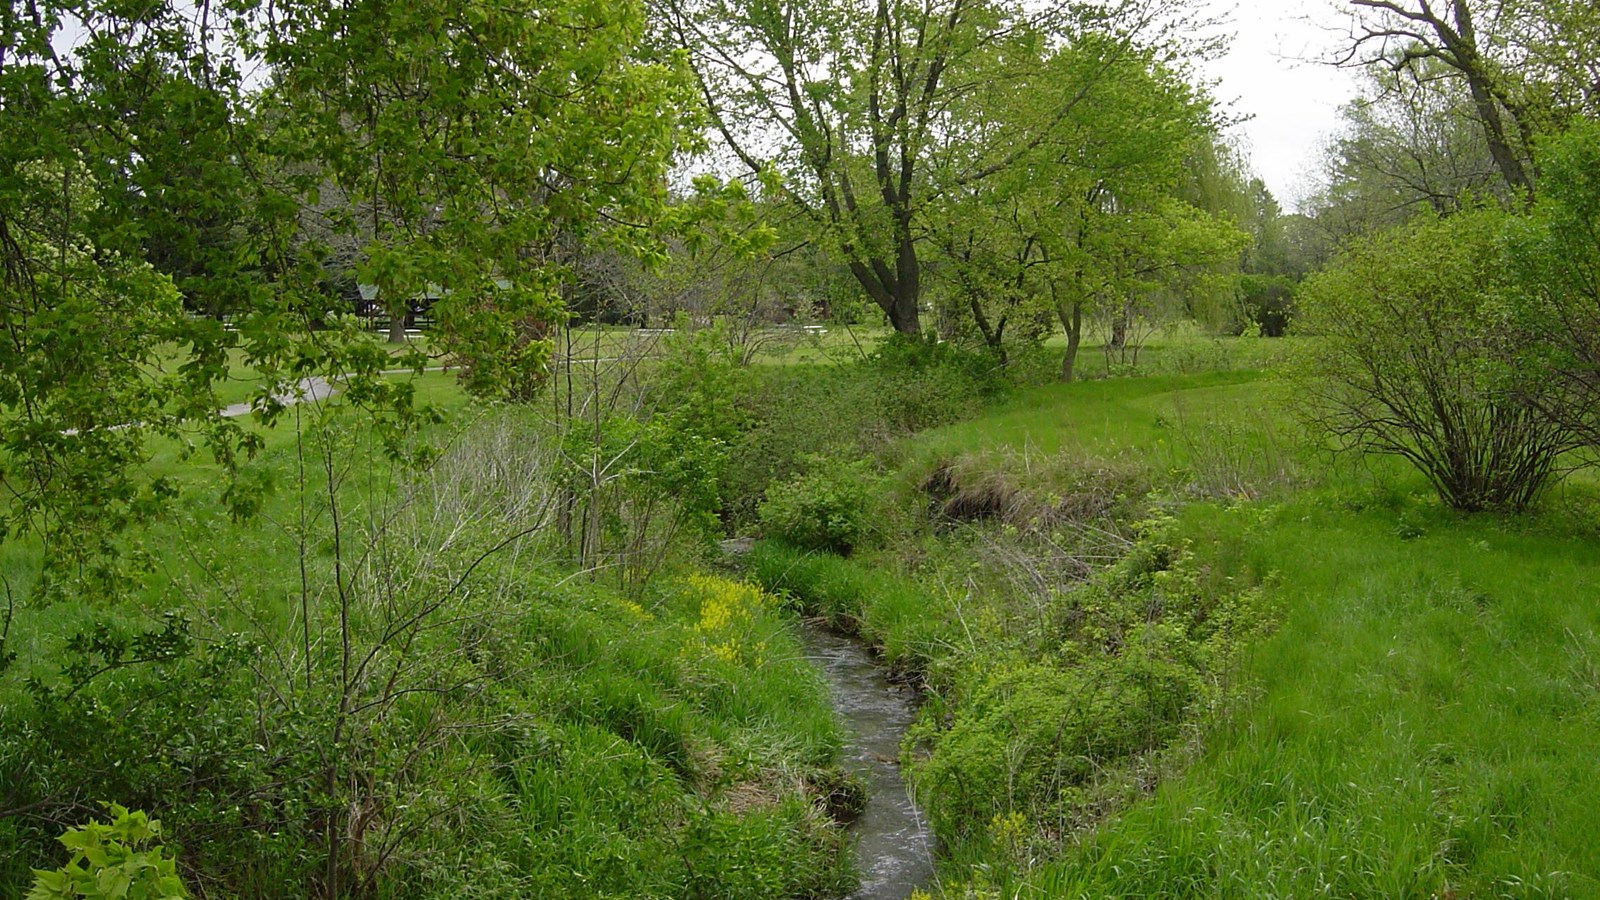 A small creek winds through the channel it cut through a park landscape.